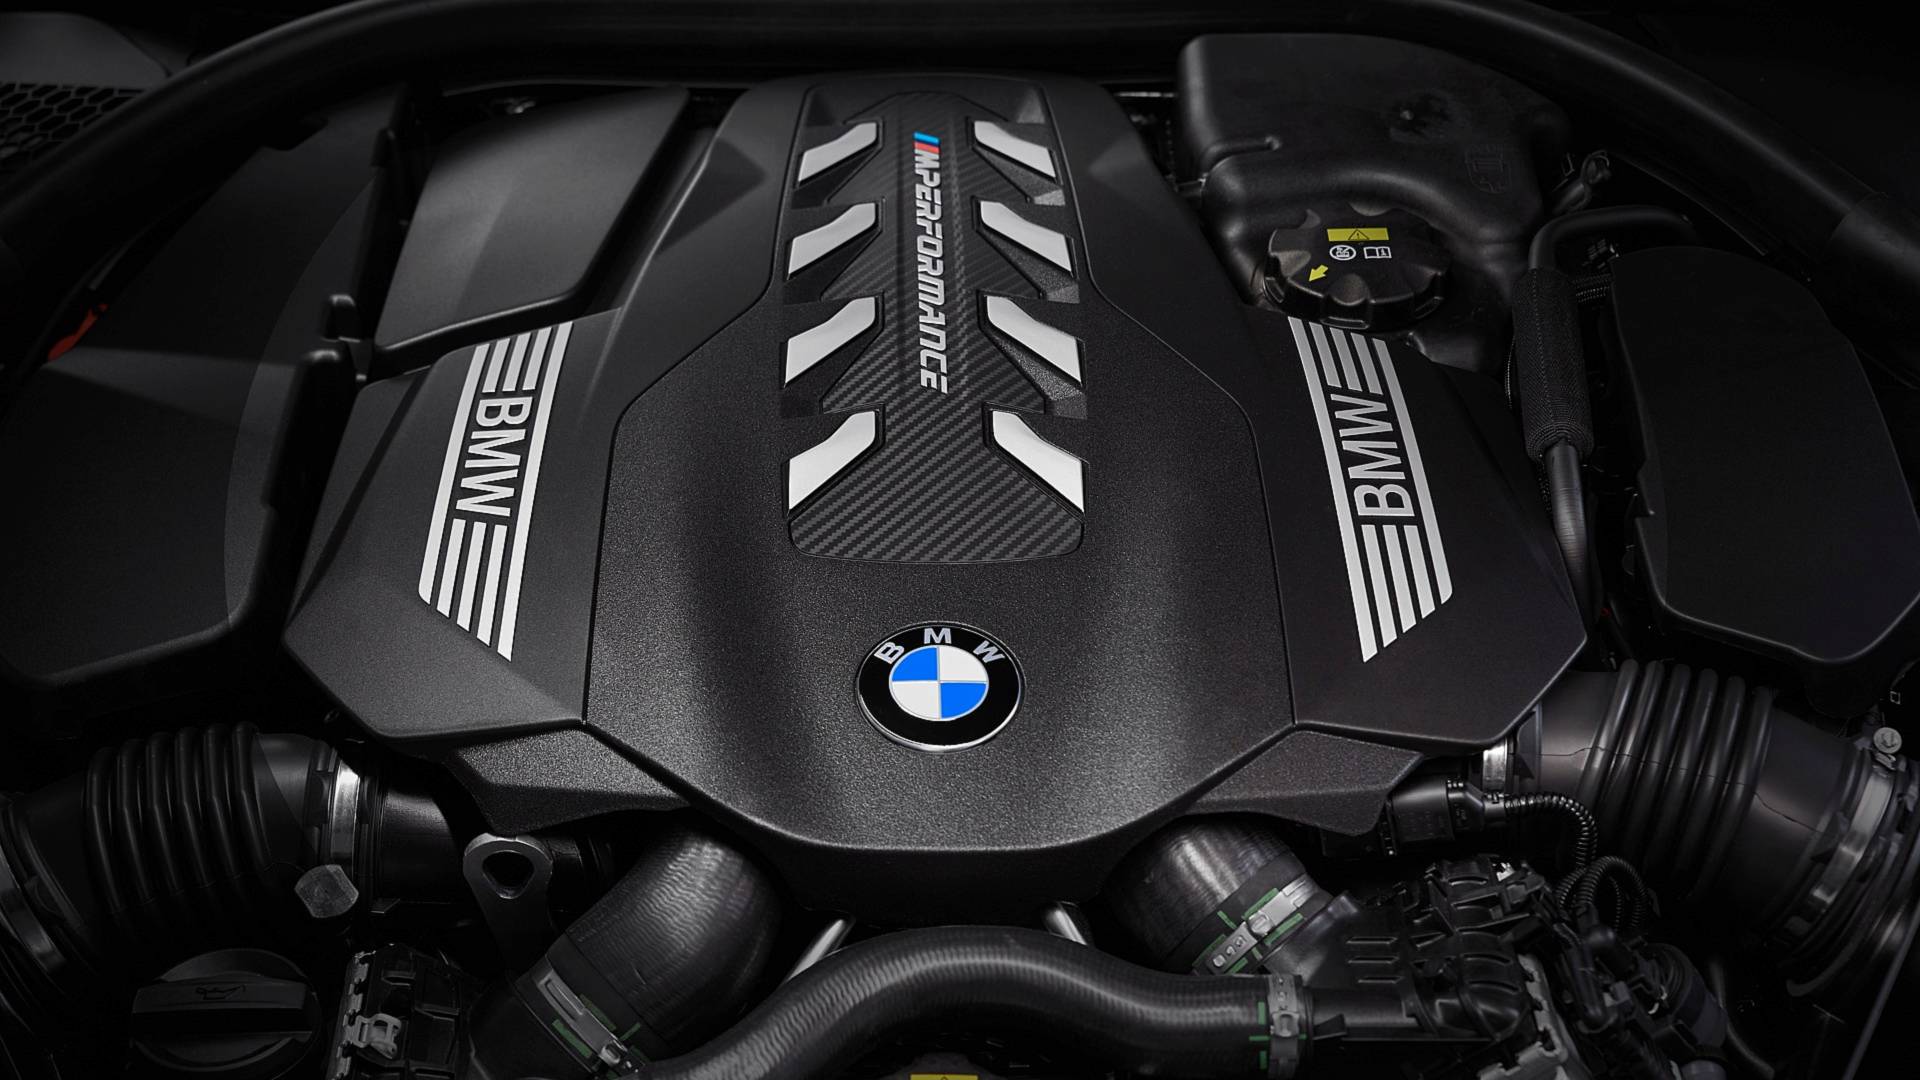 2018 BMW Serie 8: información oficial, fotos y fecha de llegada a España